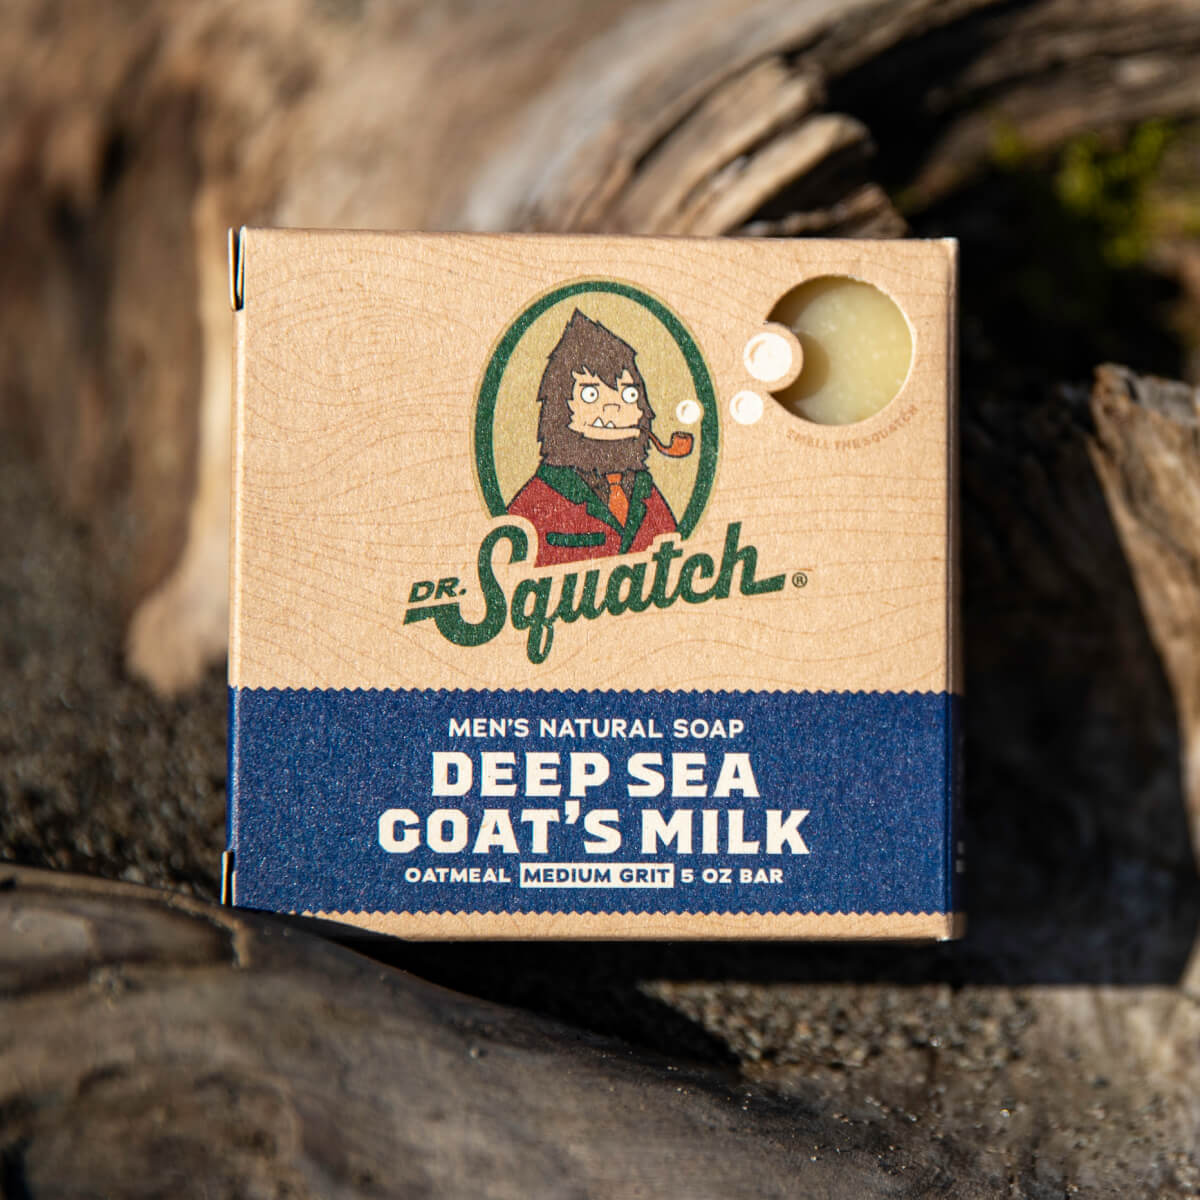 Dr. Squatch Soap DEEP SEA GOAT'S MILK - Black Sheep Sporting Goods